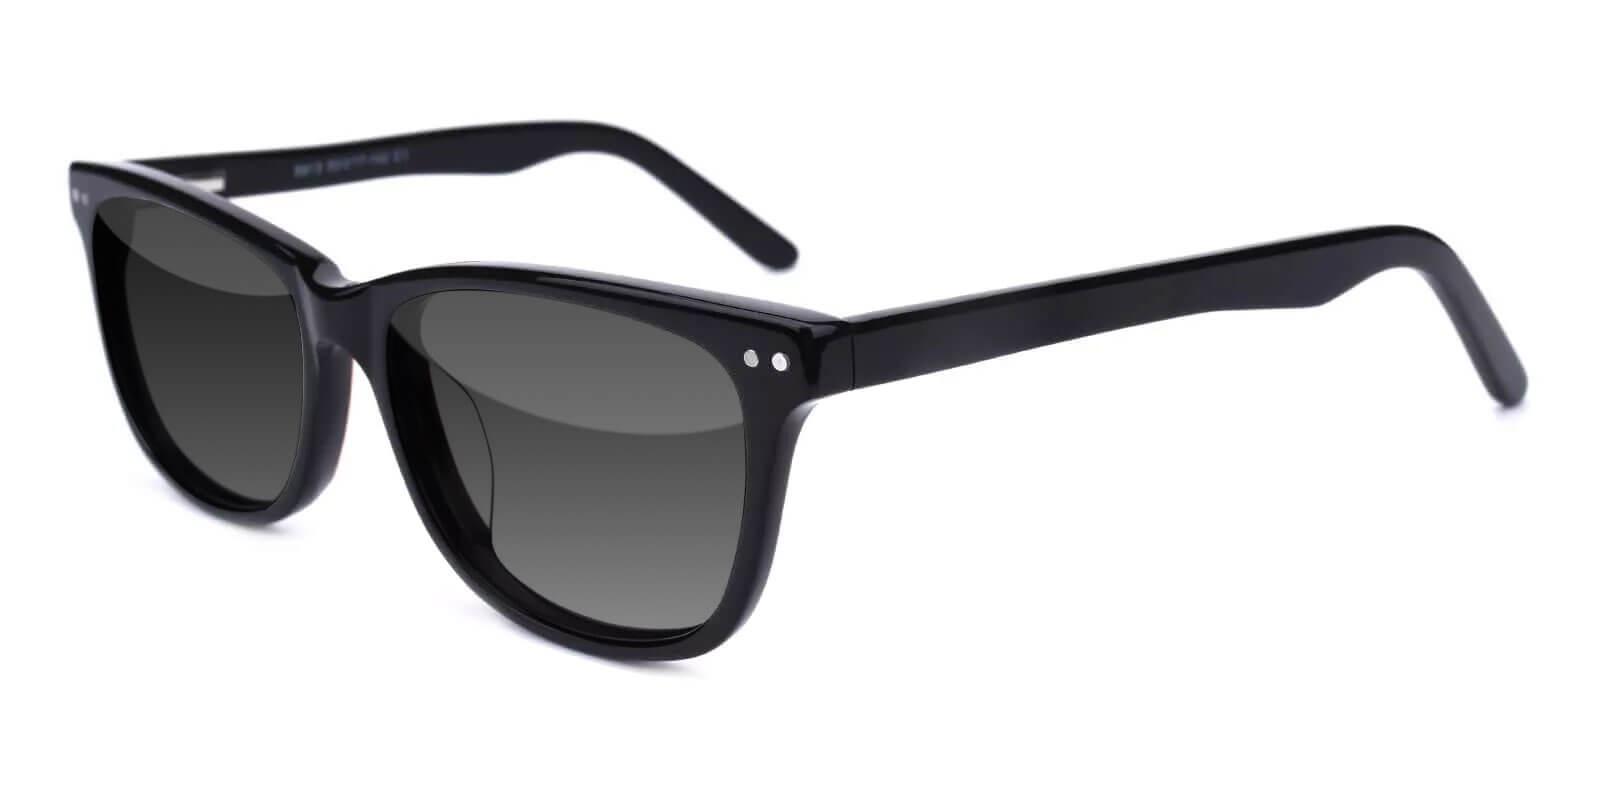 Moon Black Acetate SpringHinges , Sunglasses , UniversalBridgeFit Frames from ABBE Glasses